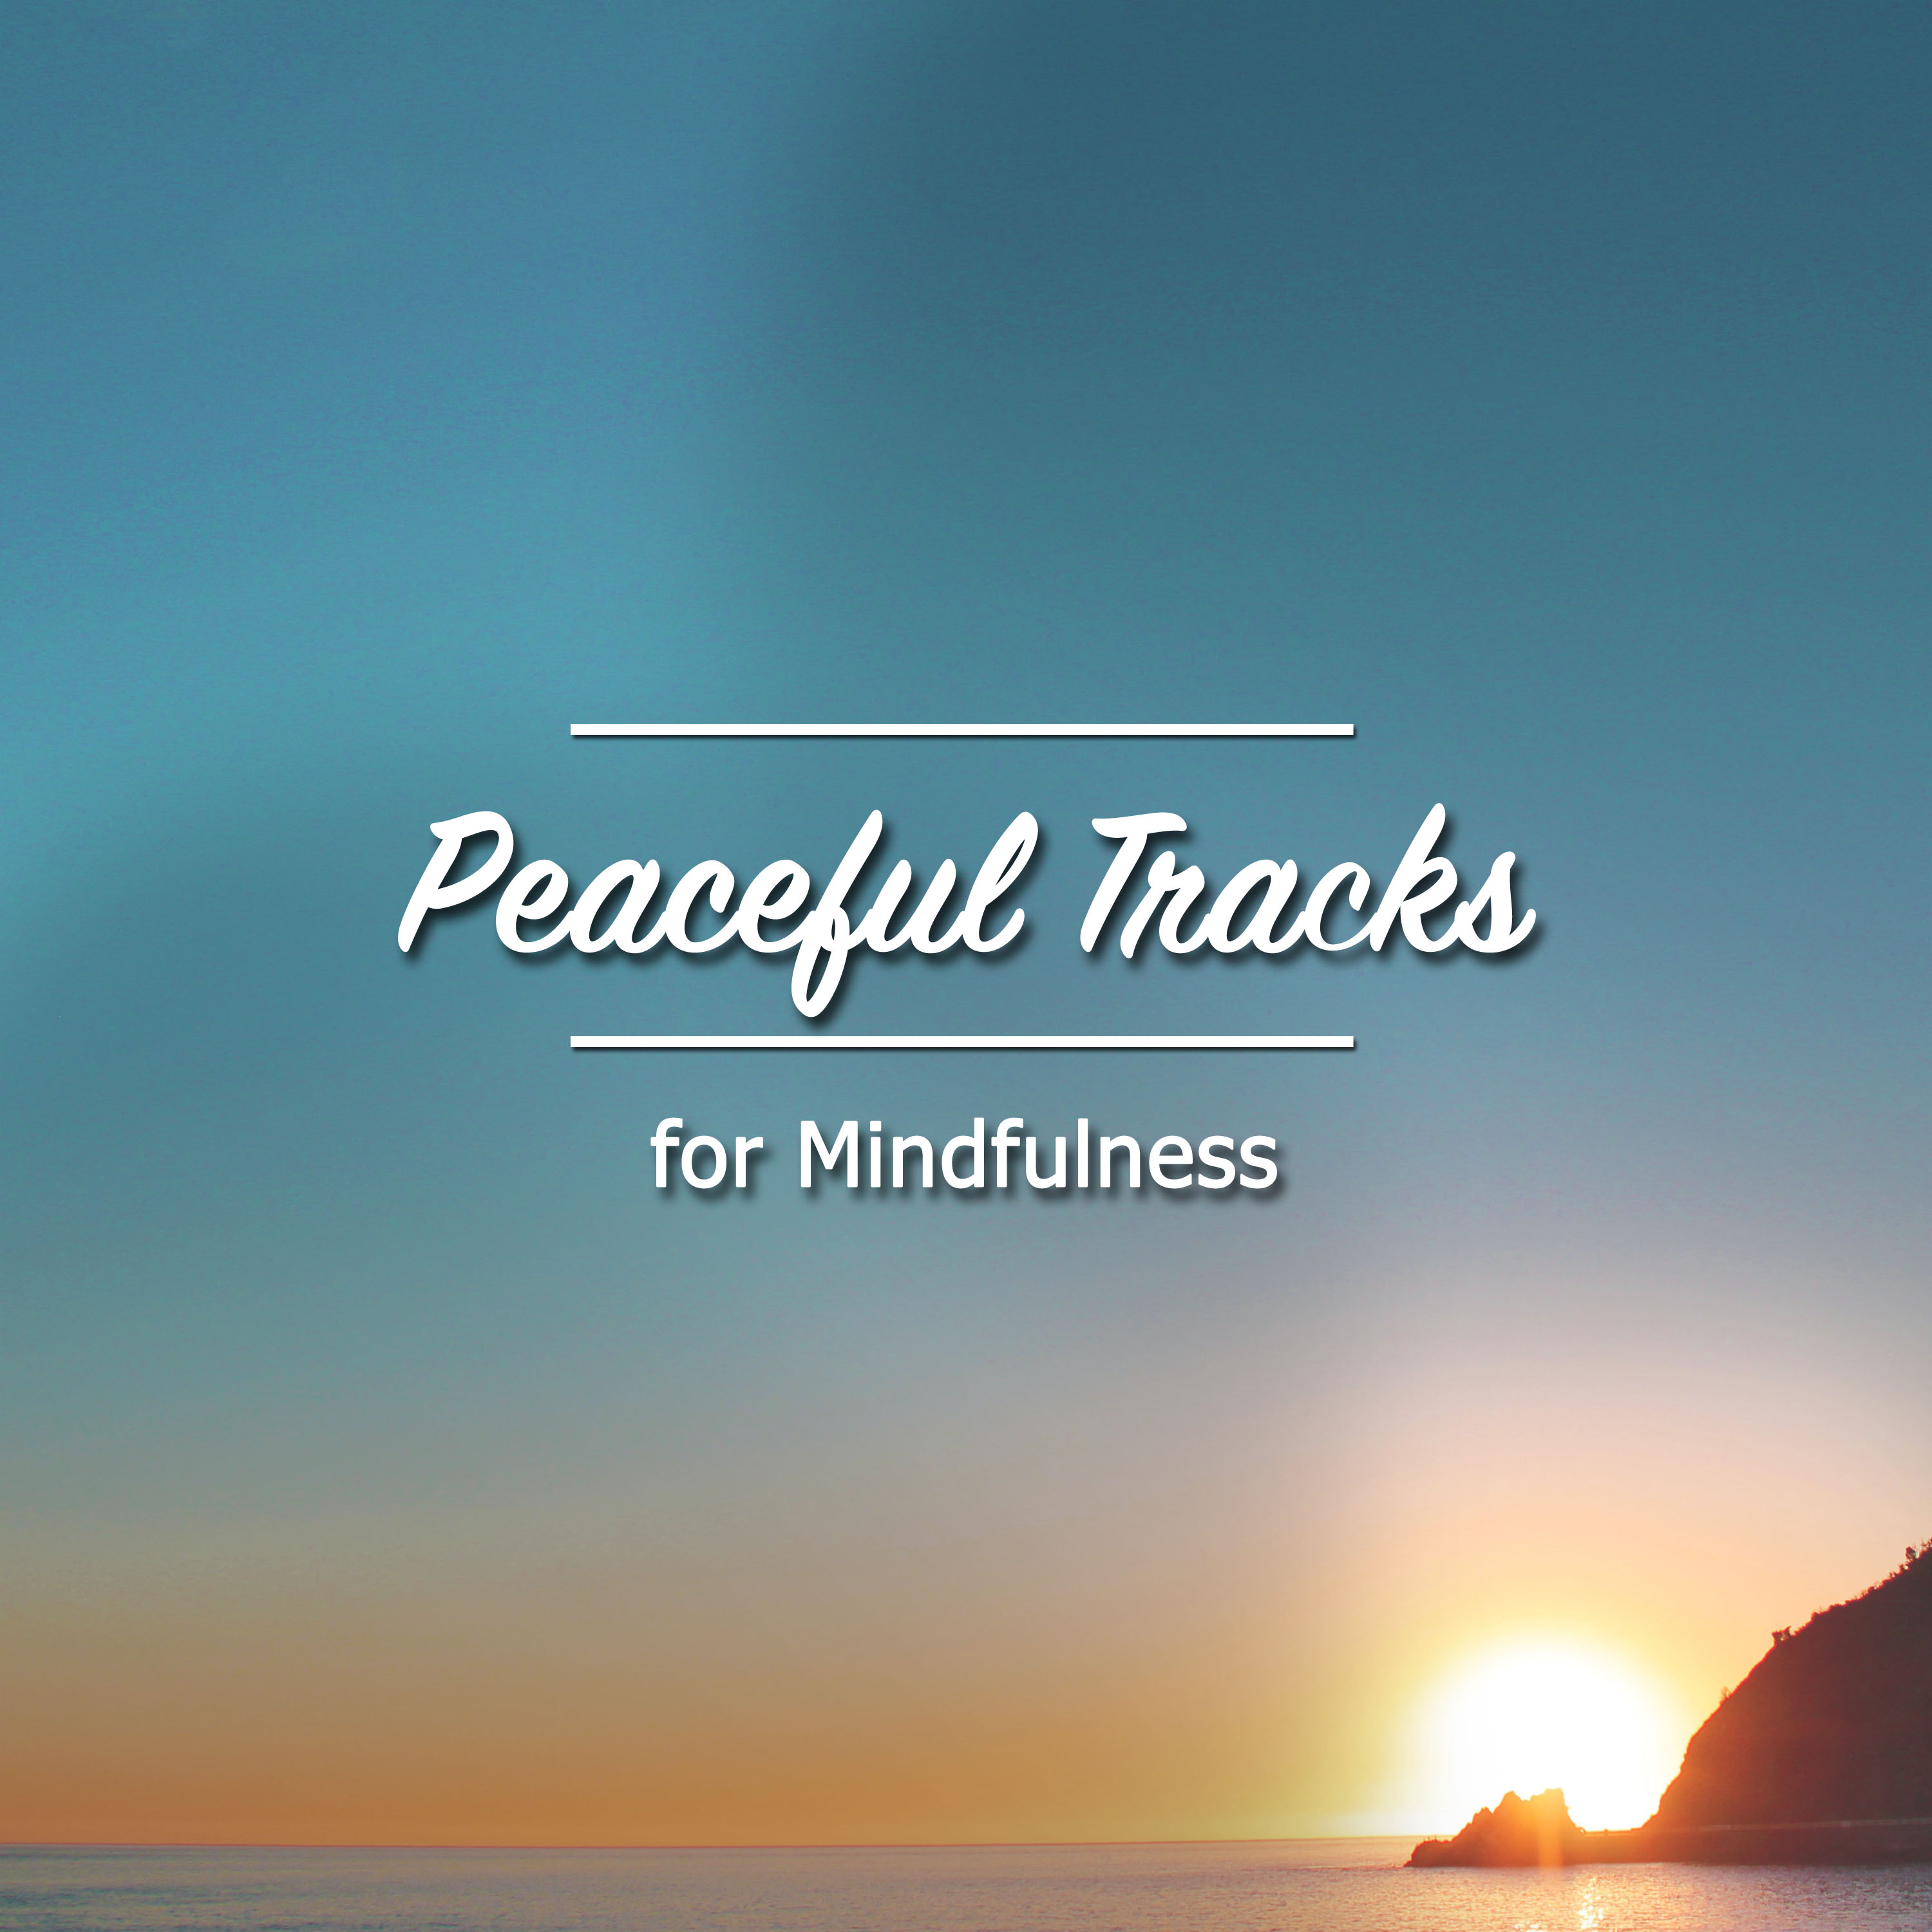 22 Peaceful Tracks for Mindfulness